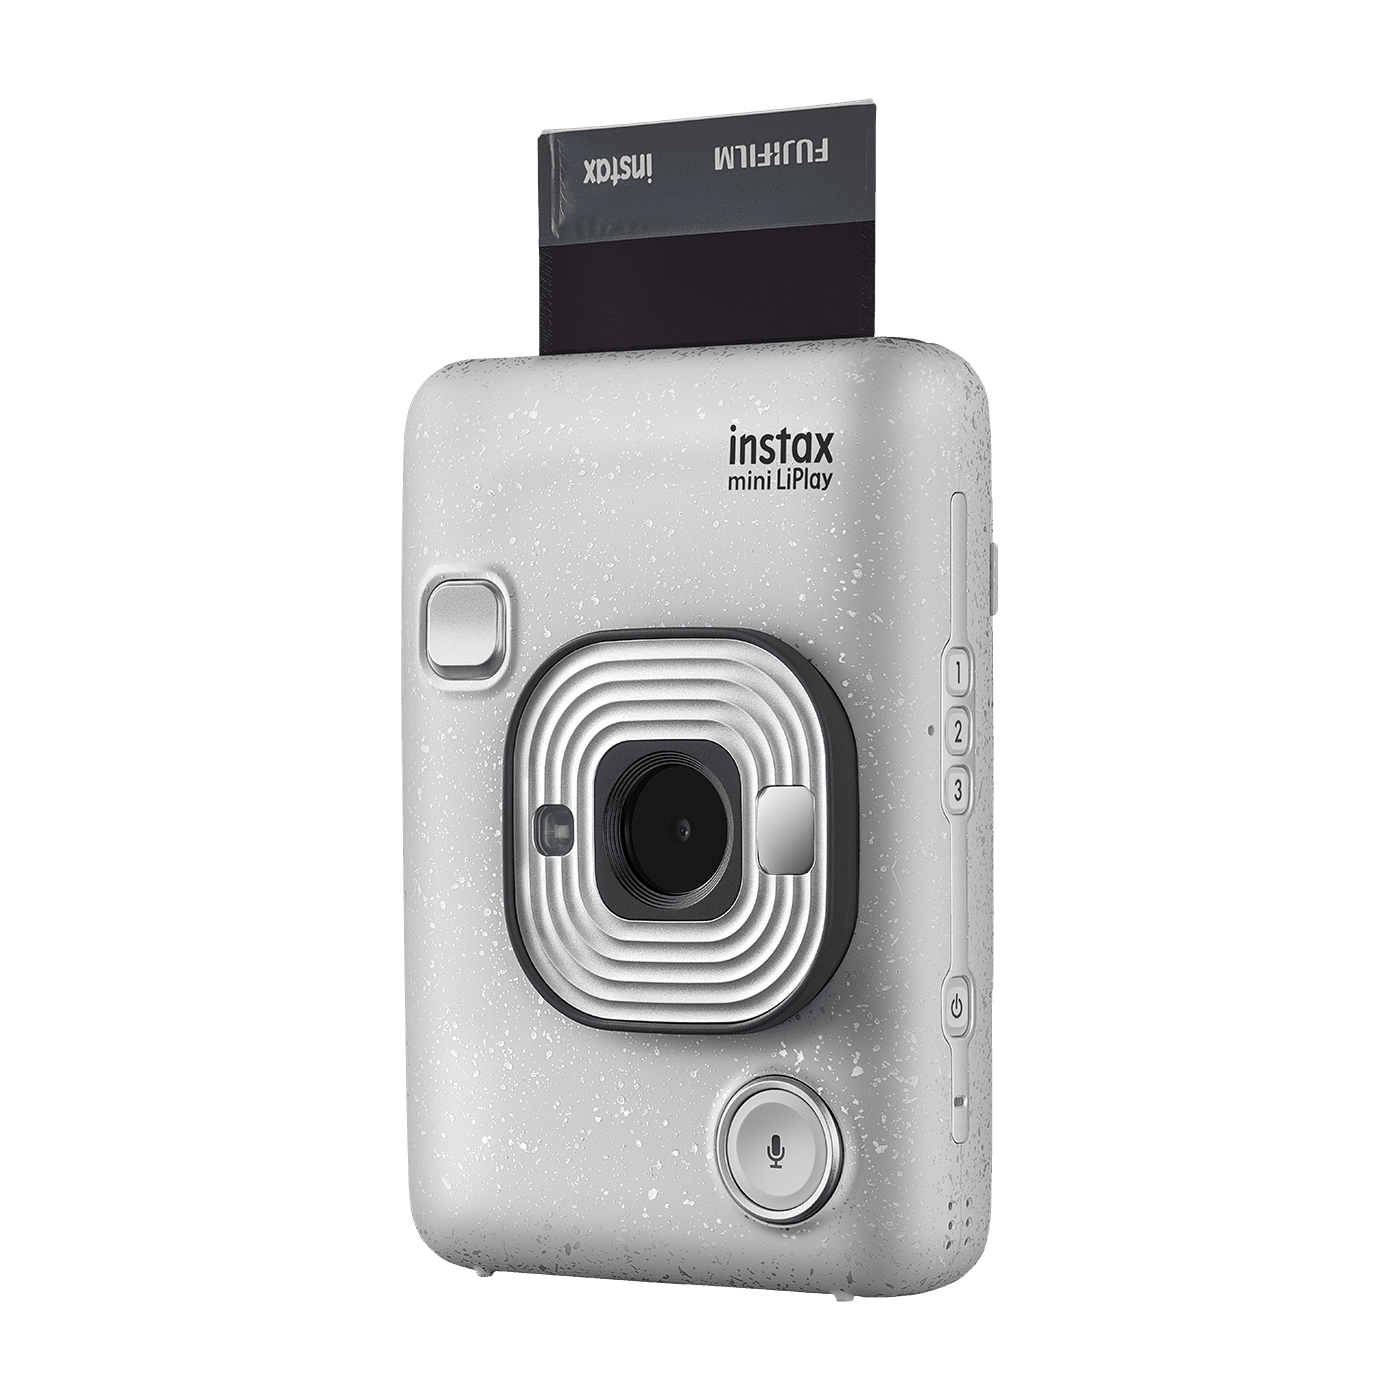 Instax Mini LiPlay Hybrid Instant Camera with optional 20 shots